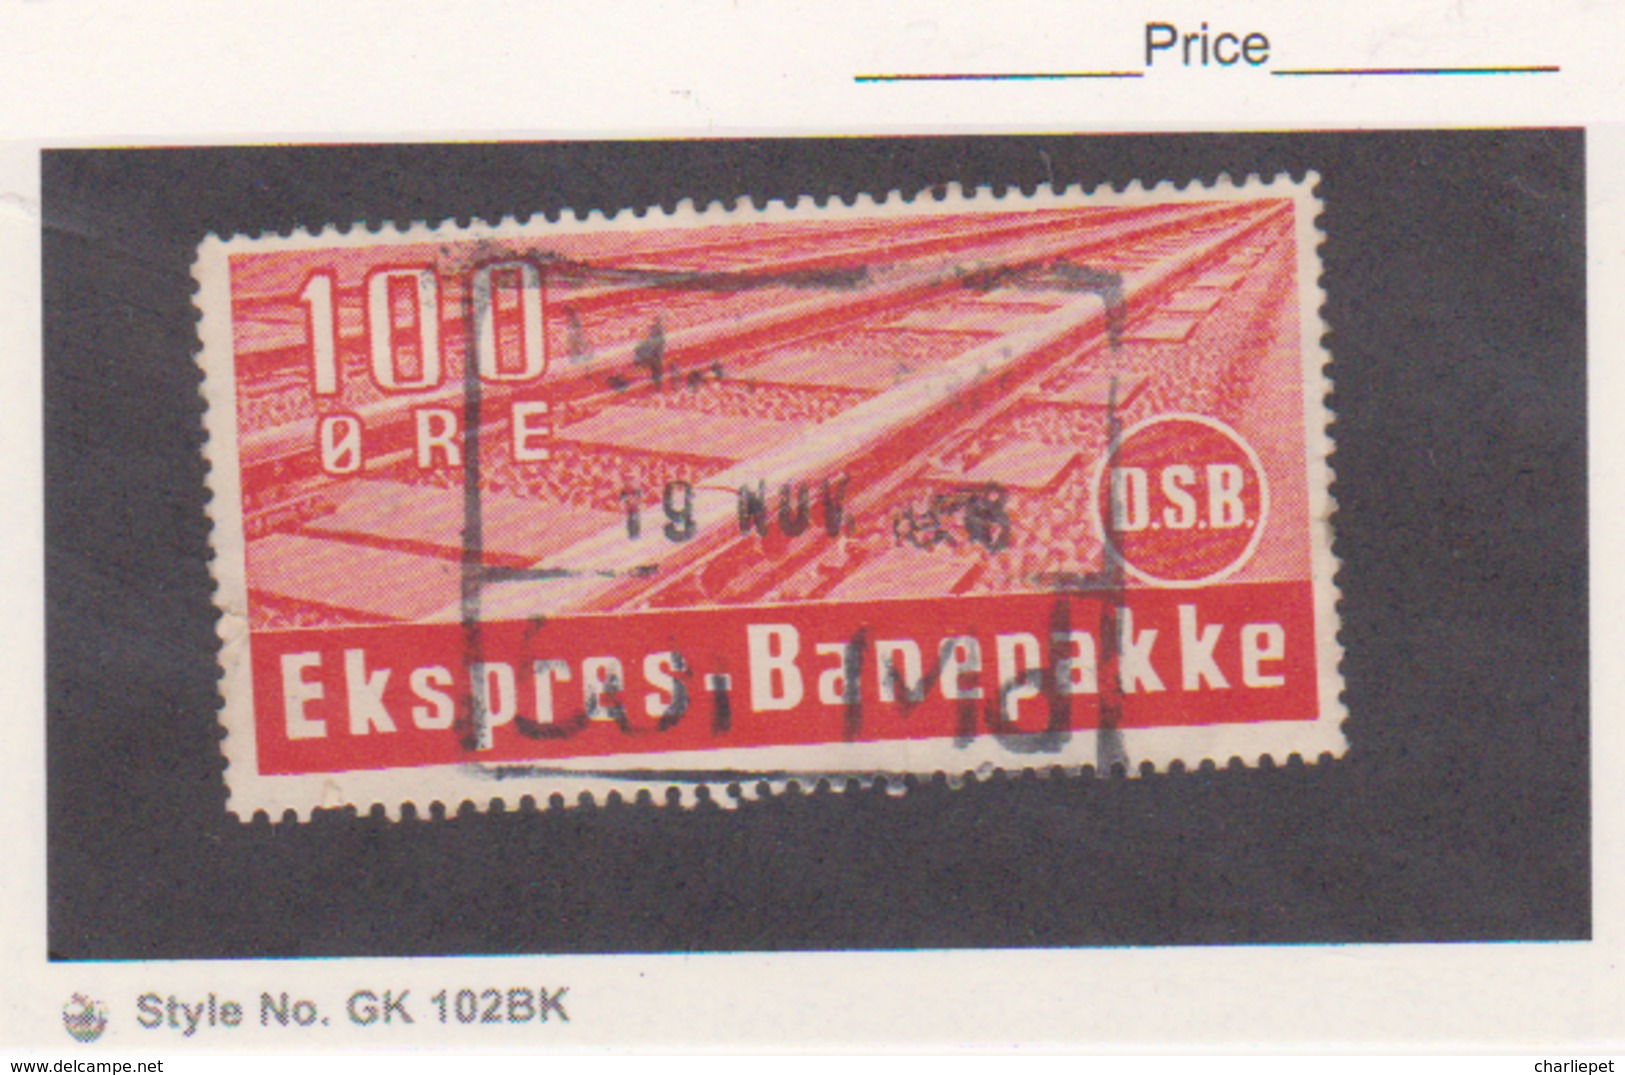 DANMARK DENMARK - EKSPRES BANEPAKKE - RAILWAY RAILROAD TRAIN Tax Stamp - Fiscali